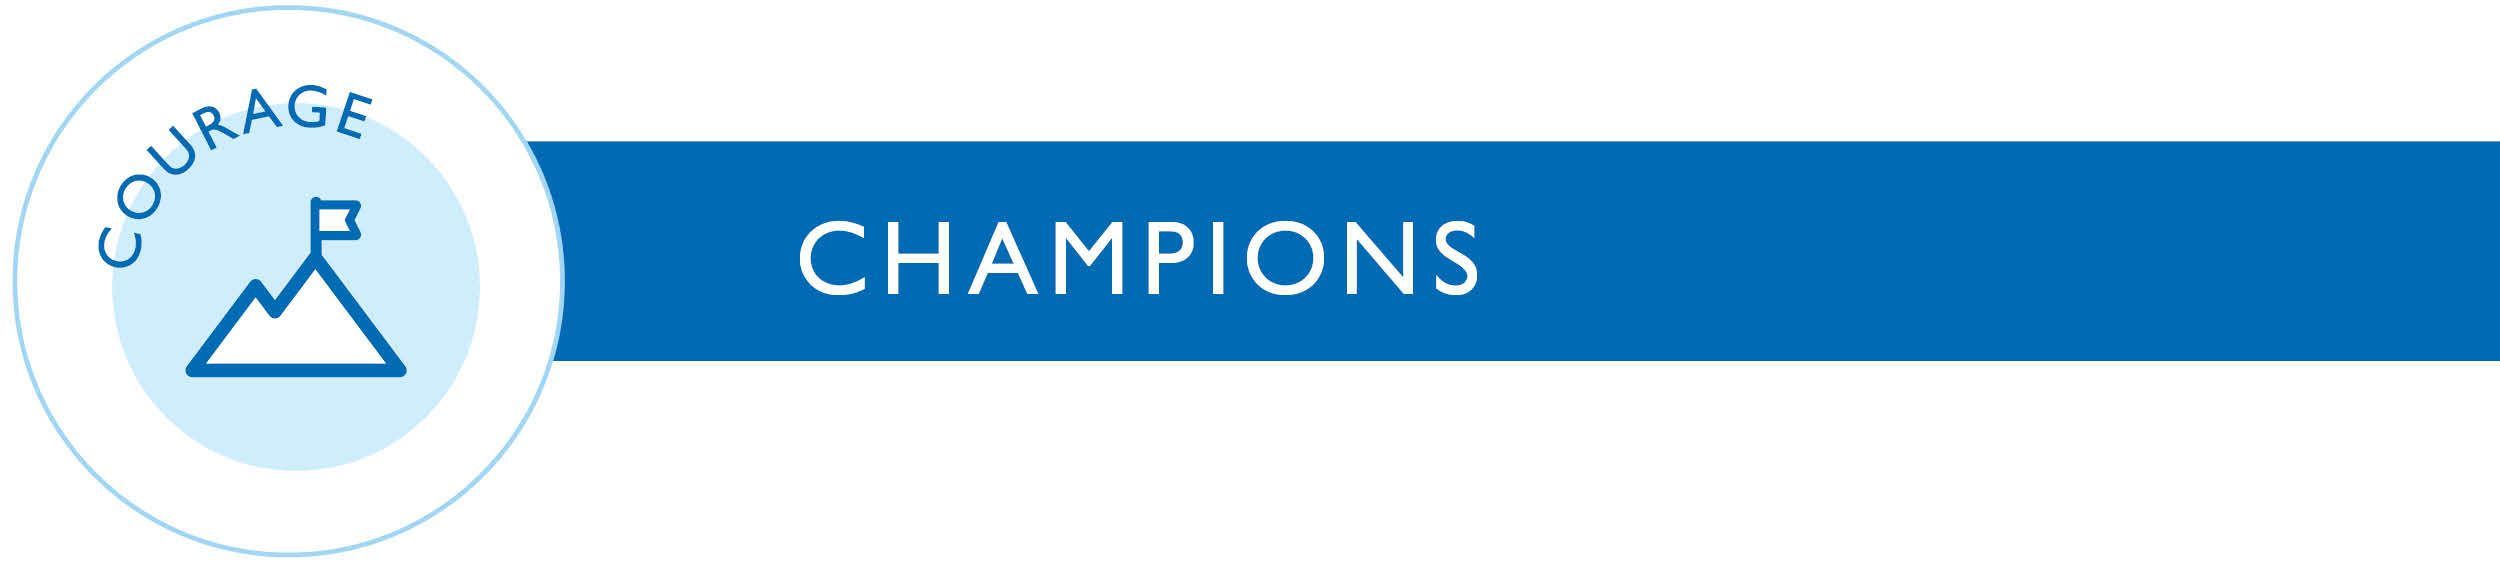 Champion Sponsors